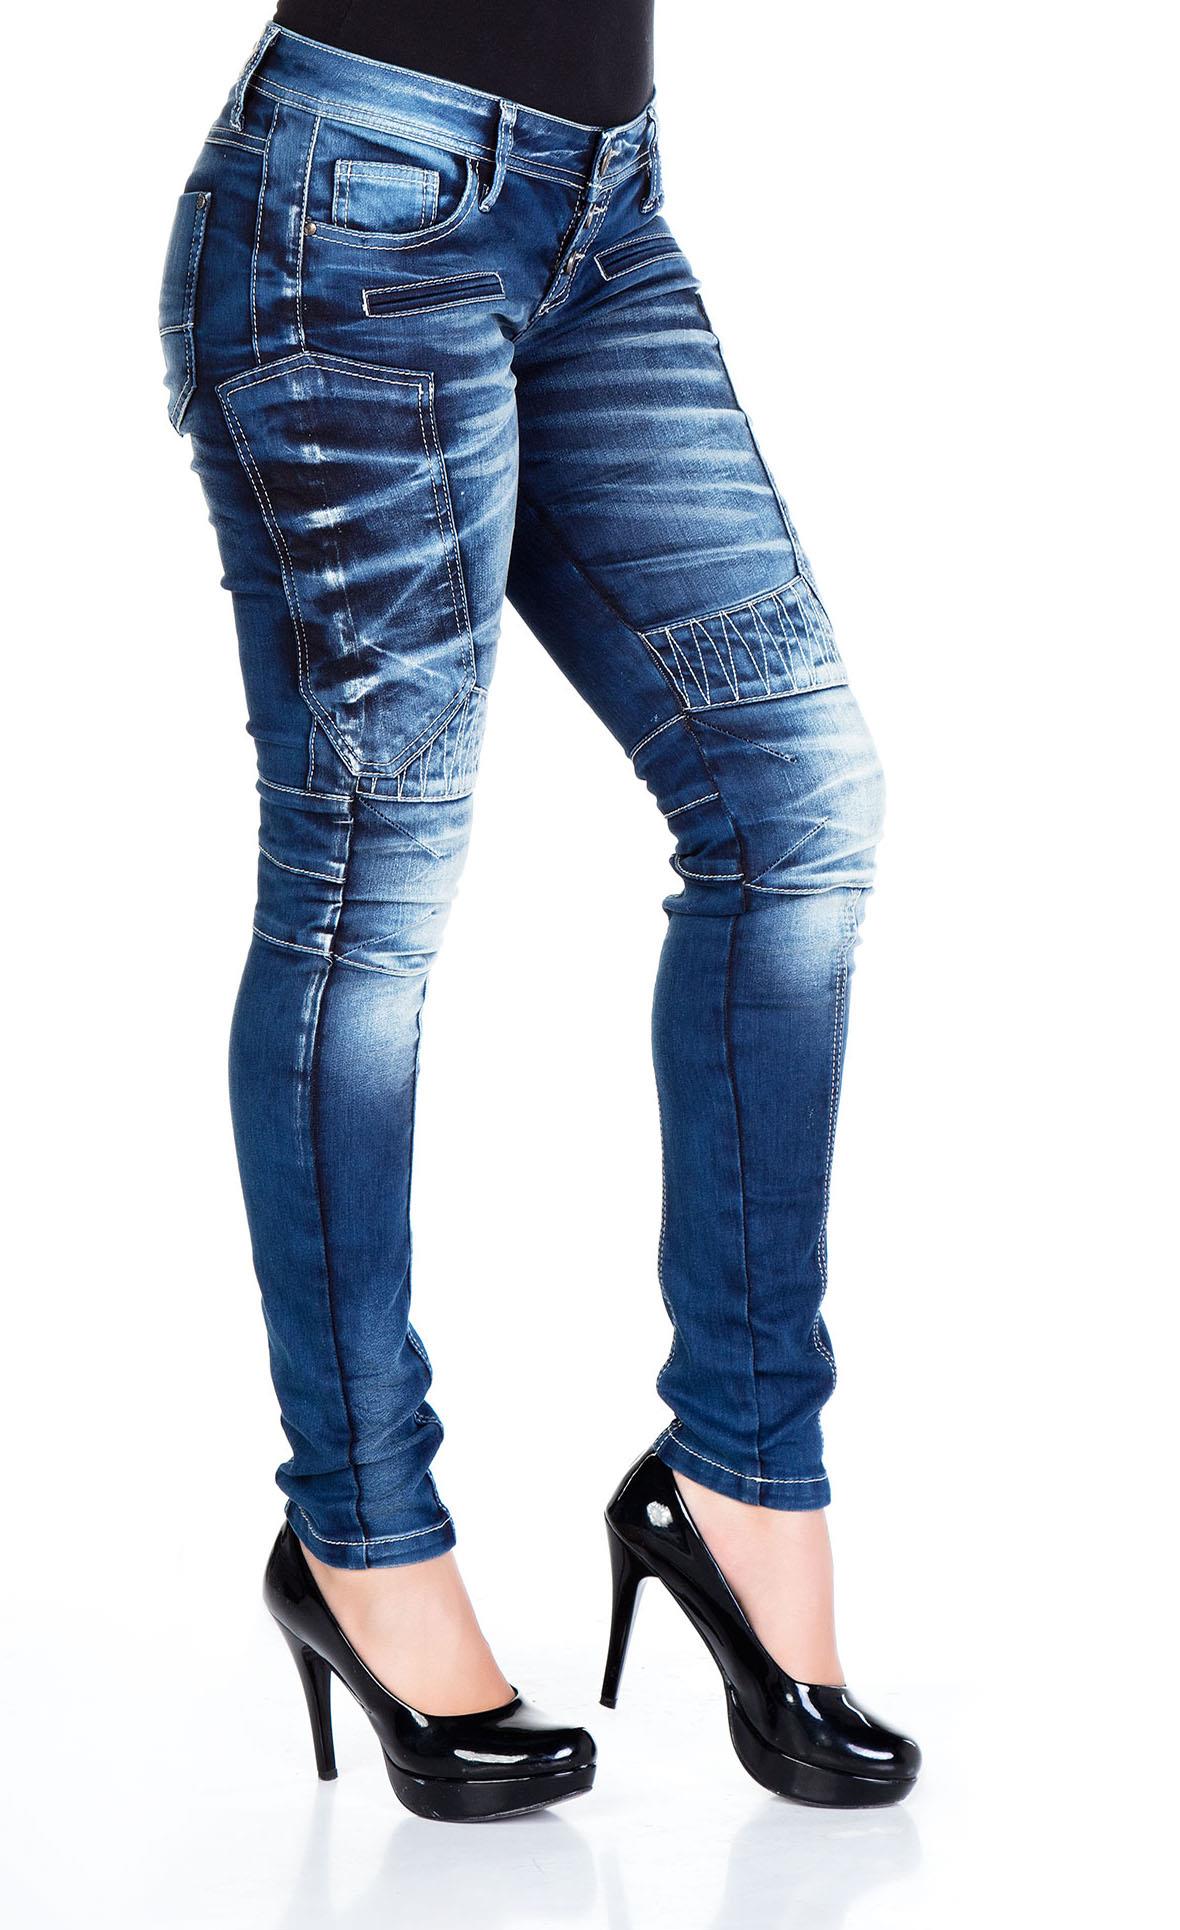 WD255 Damen bequeme Jeans im Biker-Stil in Slim Fit